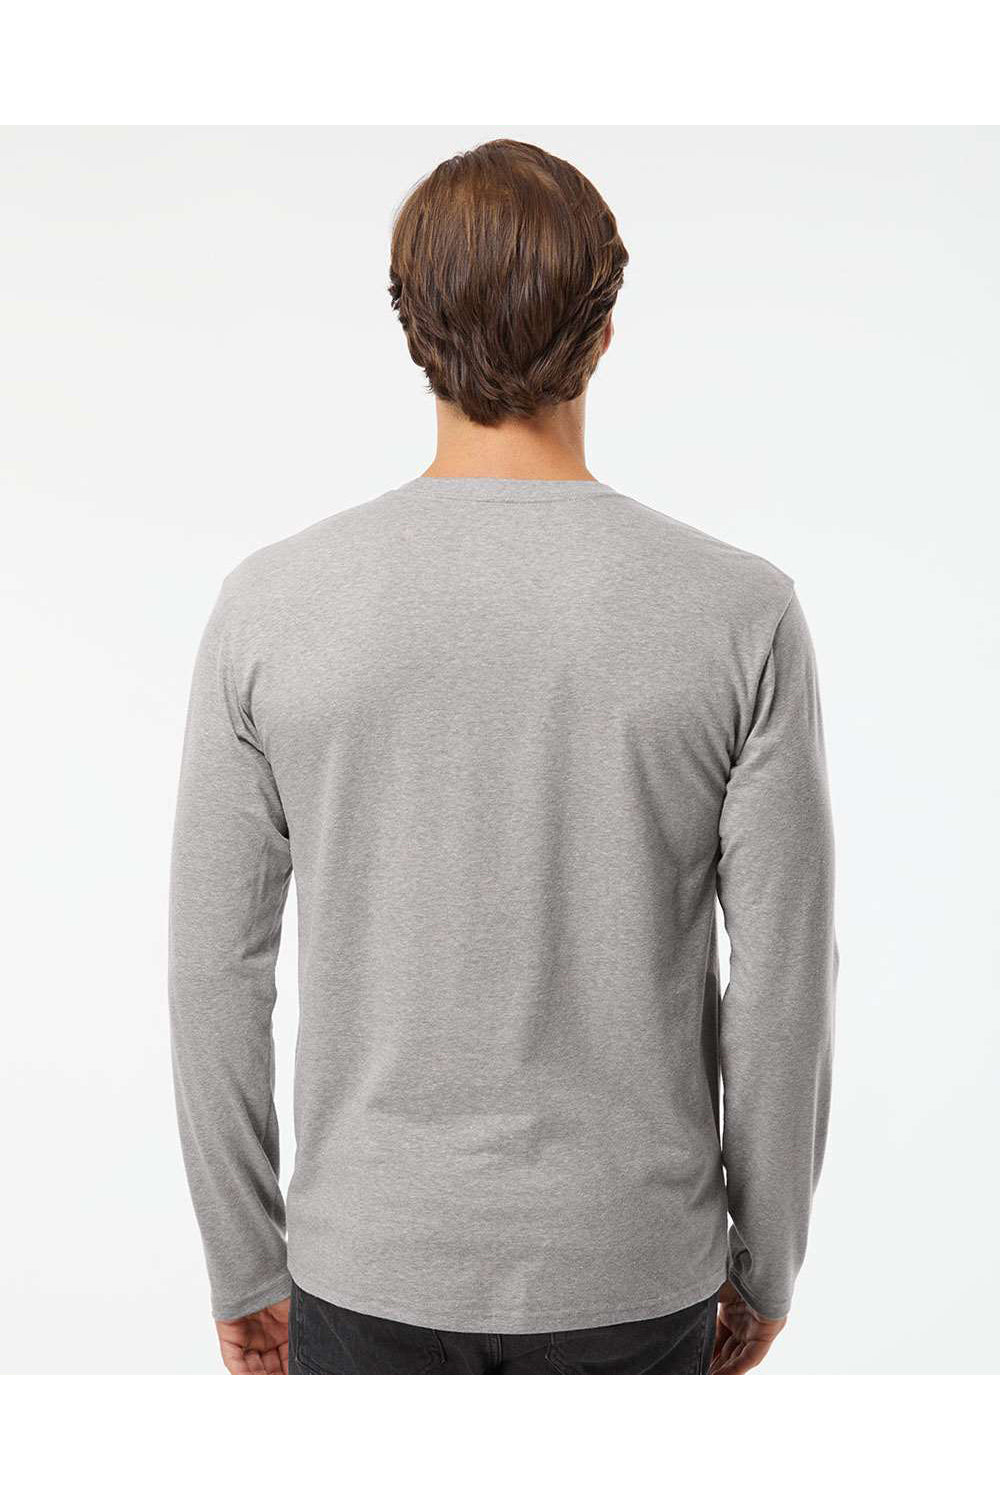 Kastlfel 2016 Mens RecycledSoft Long Sleeve Crewneck T-Shirt Steel Grey Model Back